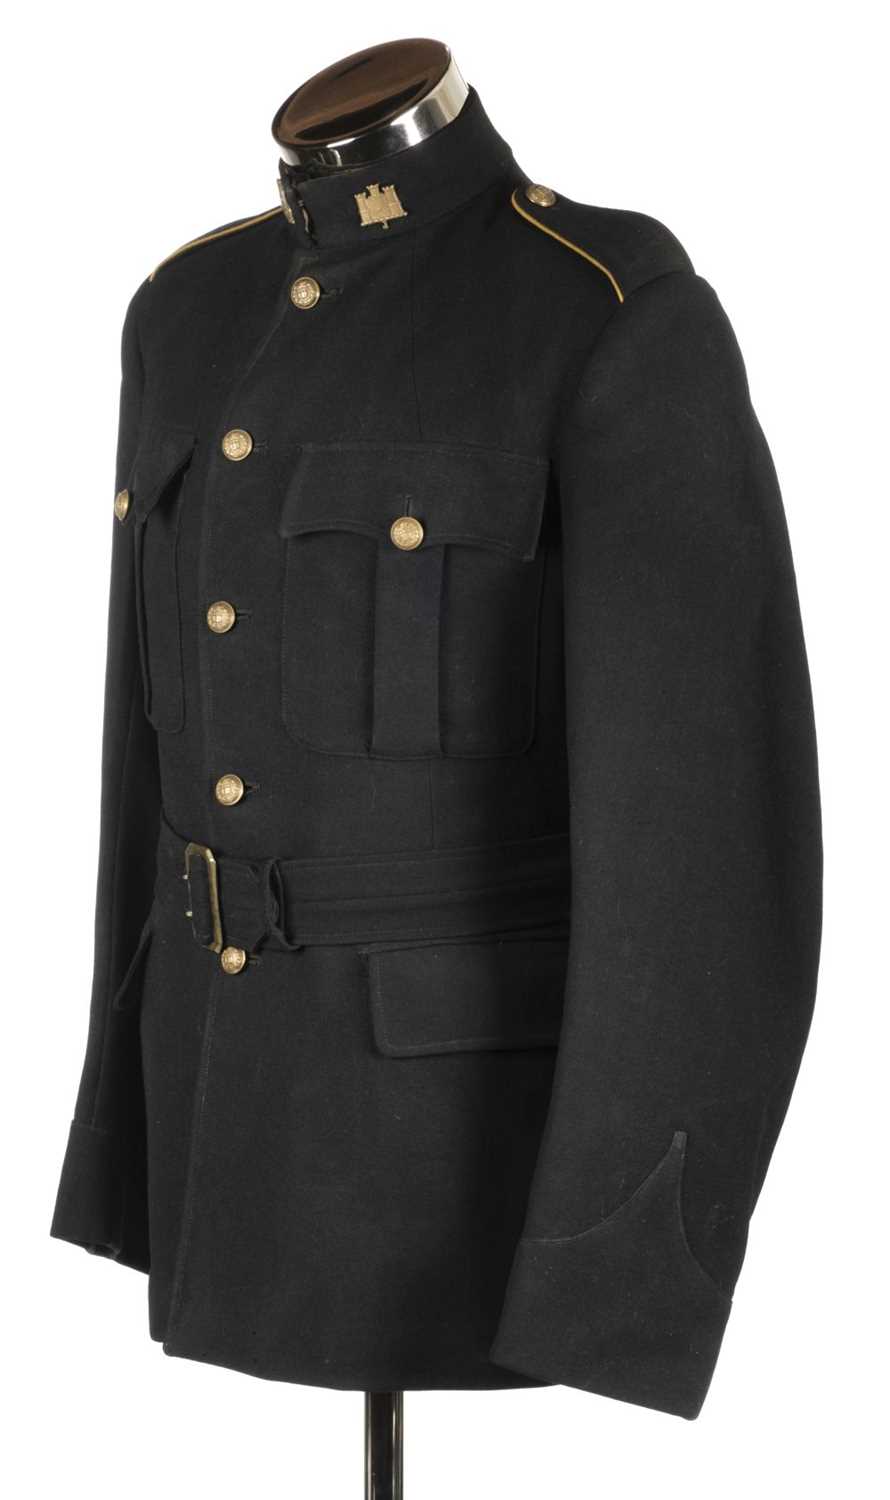 Lot 396 - Suffolk Regiment. Other Ranks Uniform